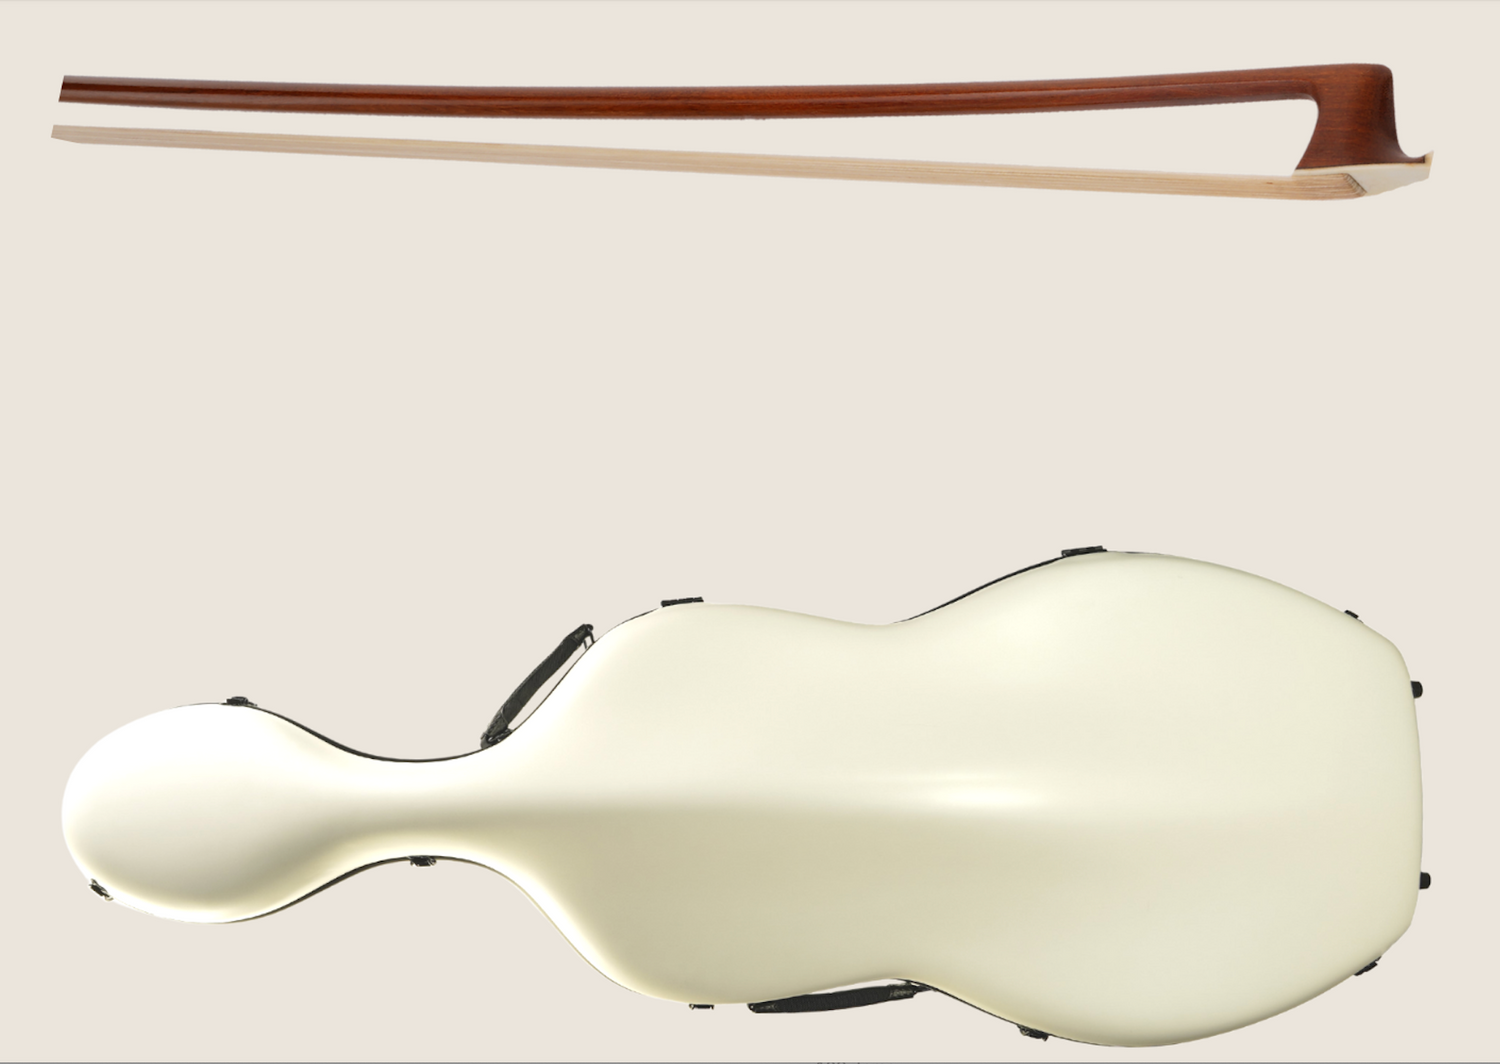 violin viola cello bow case infiniti strings toronto violin shop violin for sale